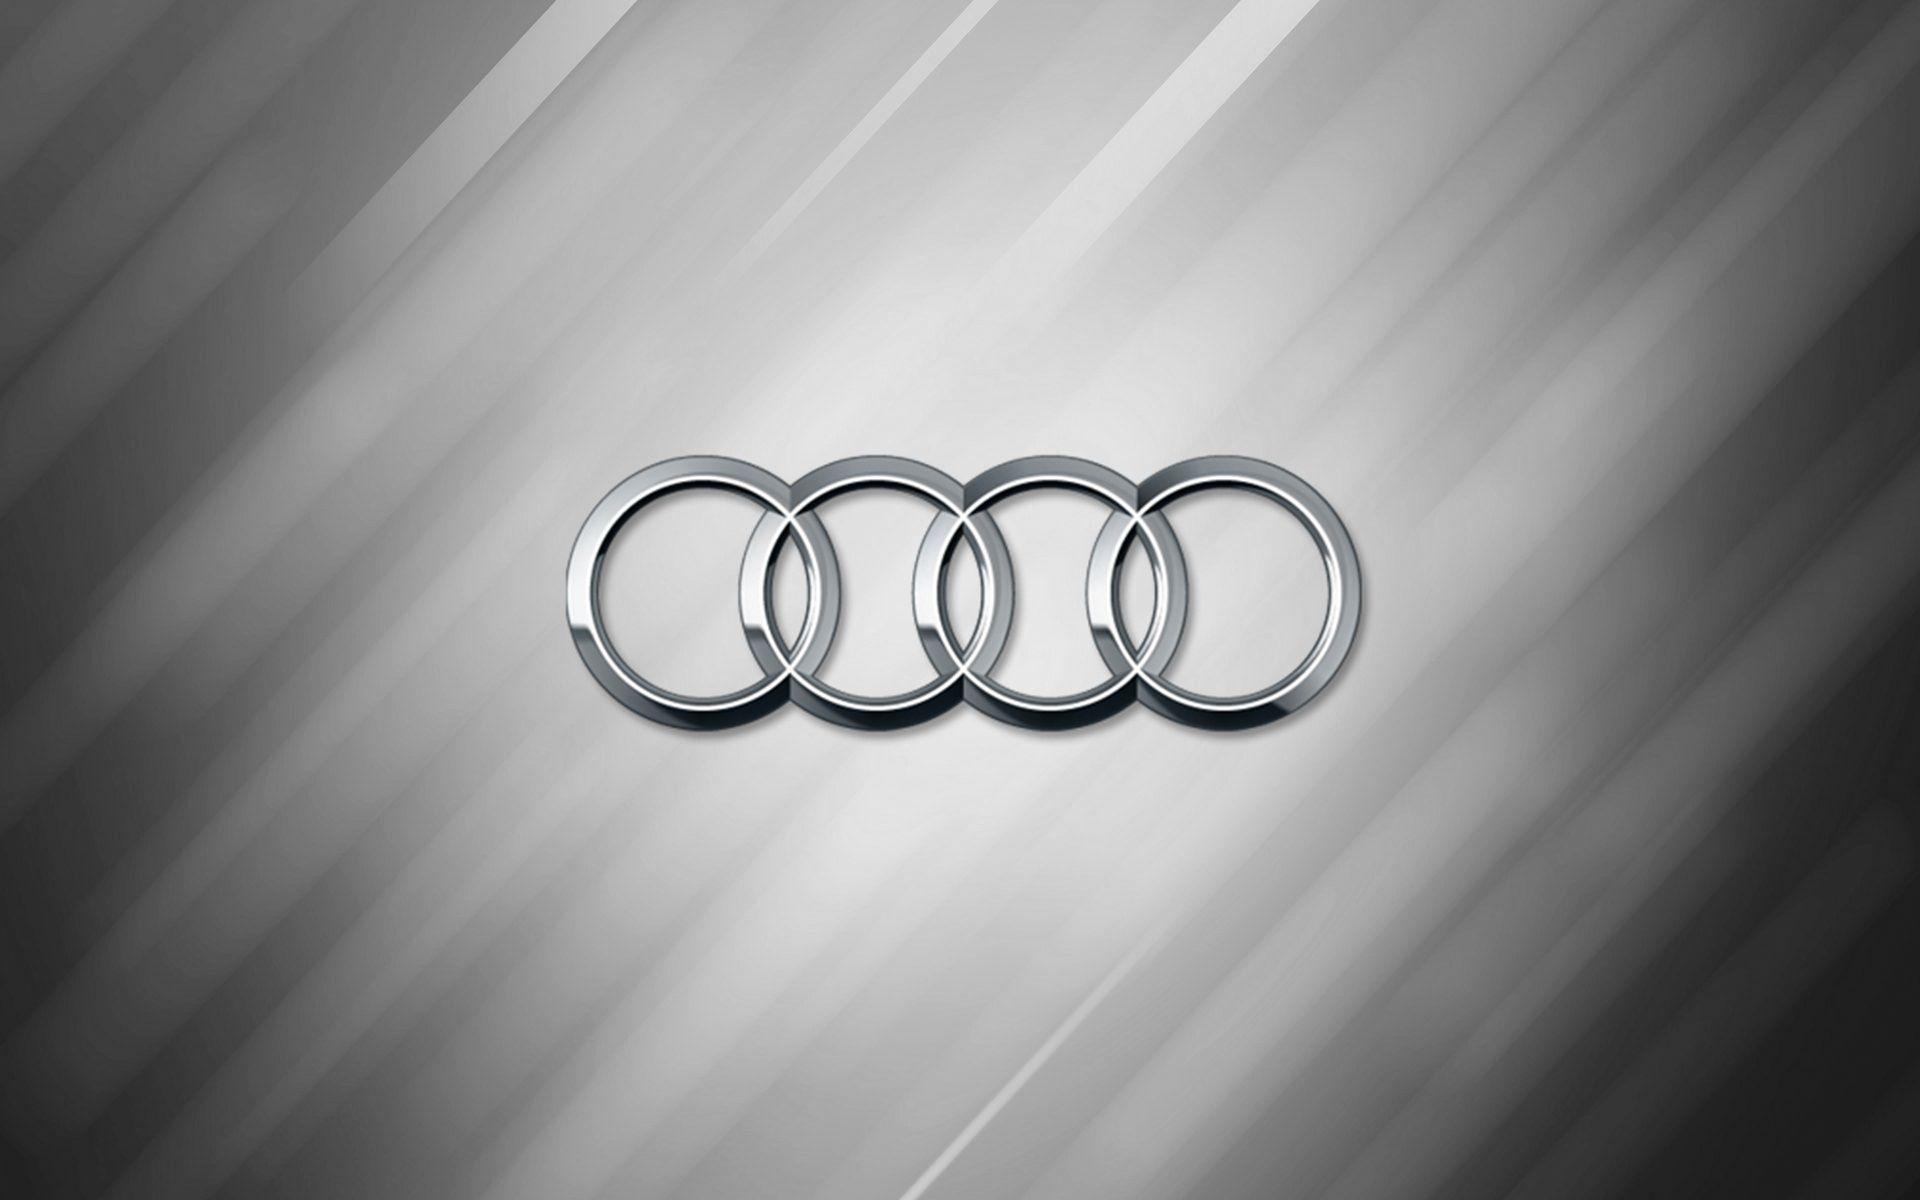 Audi Symbol Wallpapers Top Free Audi Symbol Backgrounds Wallpaperaccess